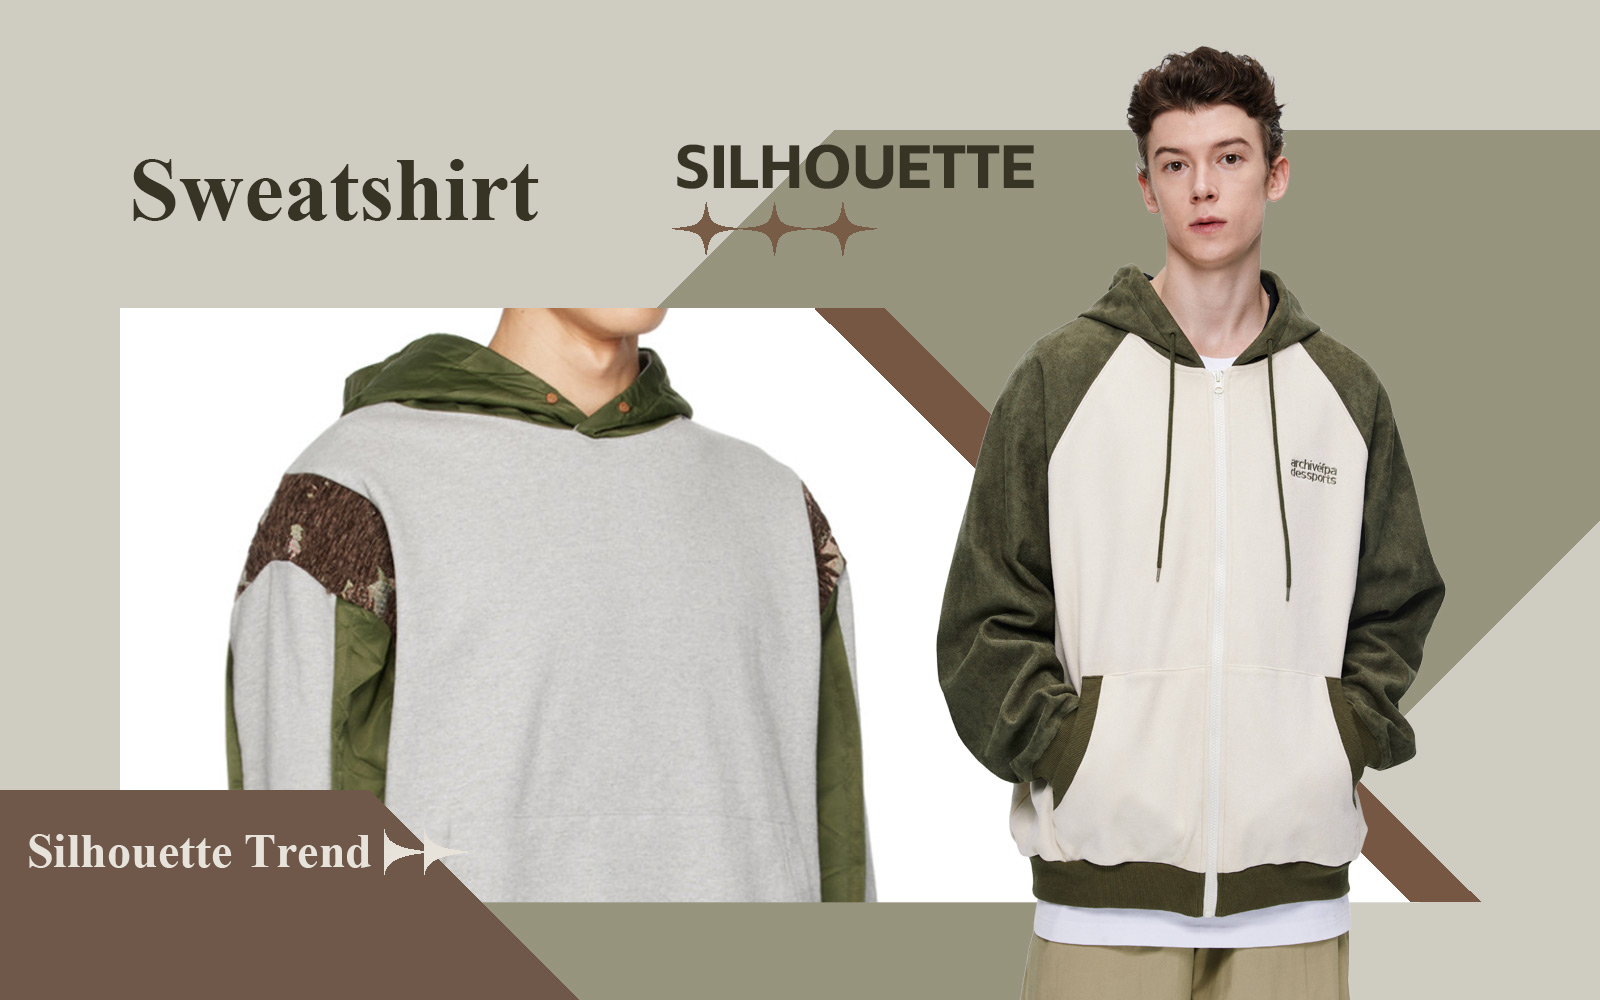 The Silhouette Trend for Men's Sweatshirt